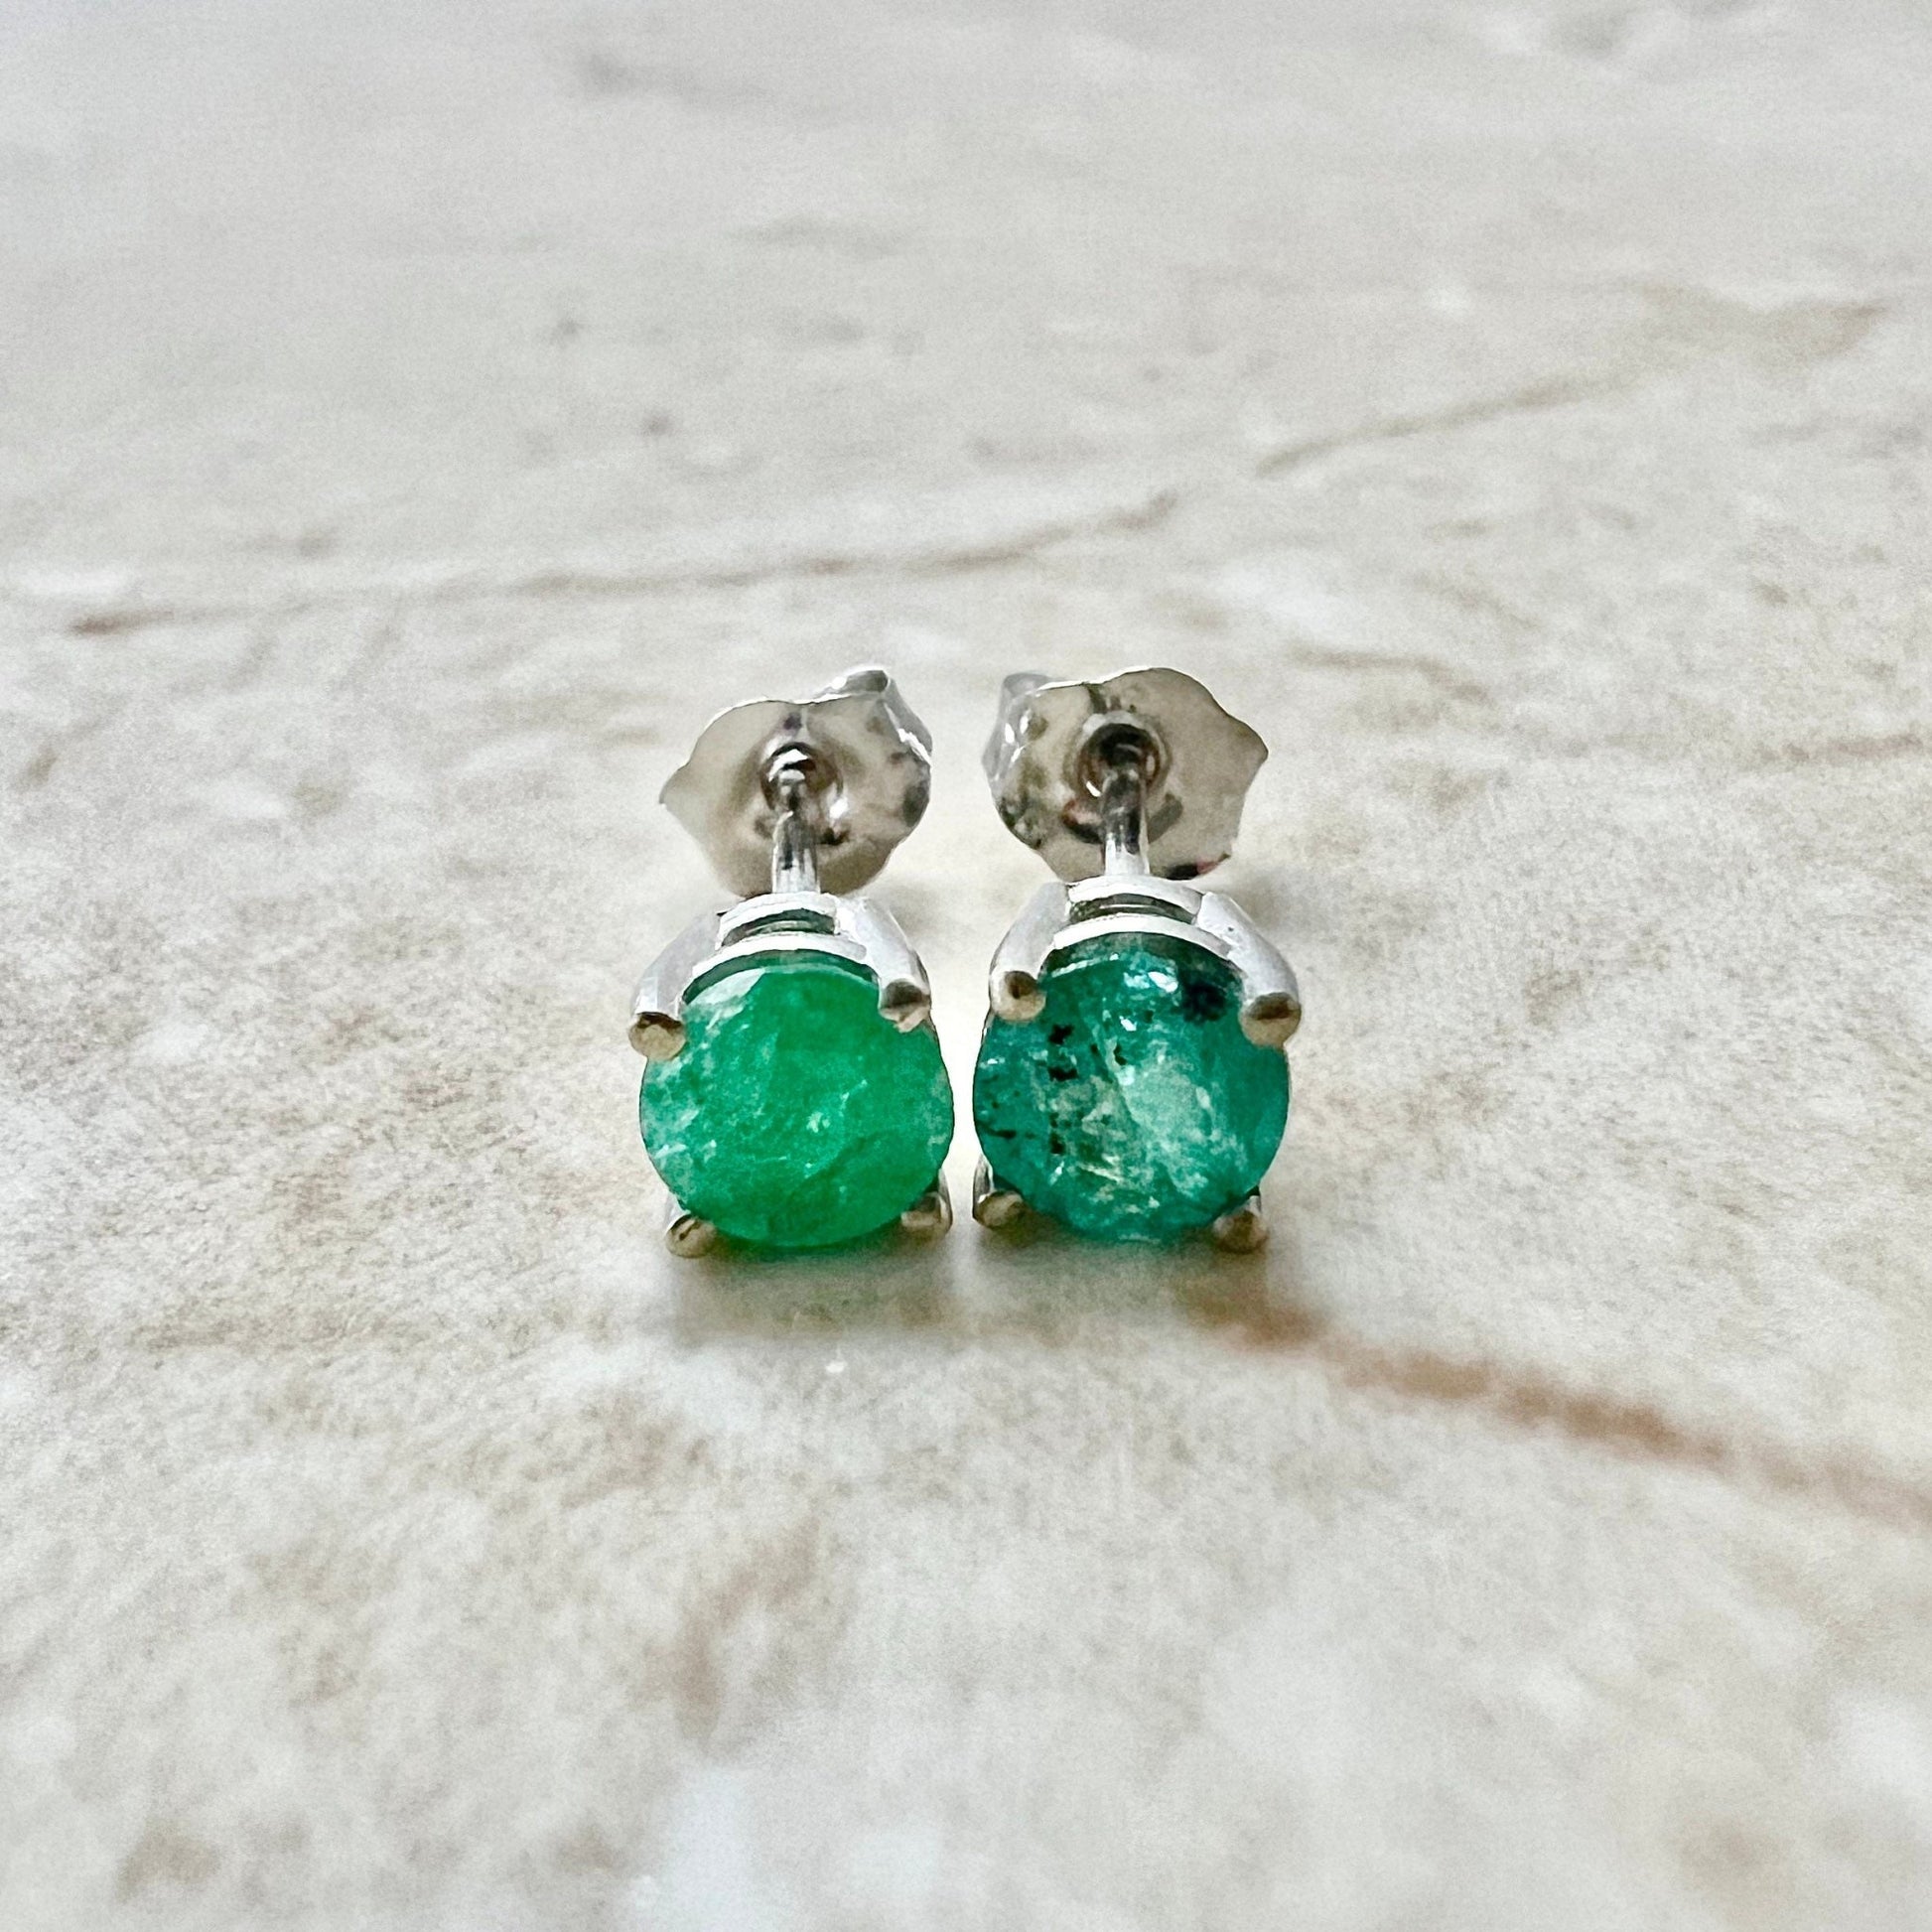 14K Natural Emerald Studs - 14K White Gold Emerald Earrings - May Birthstone Earrings - Genuine Emerald Stud Earrings - Best Gifts For Her